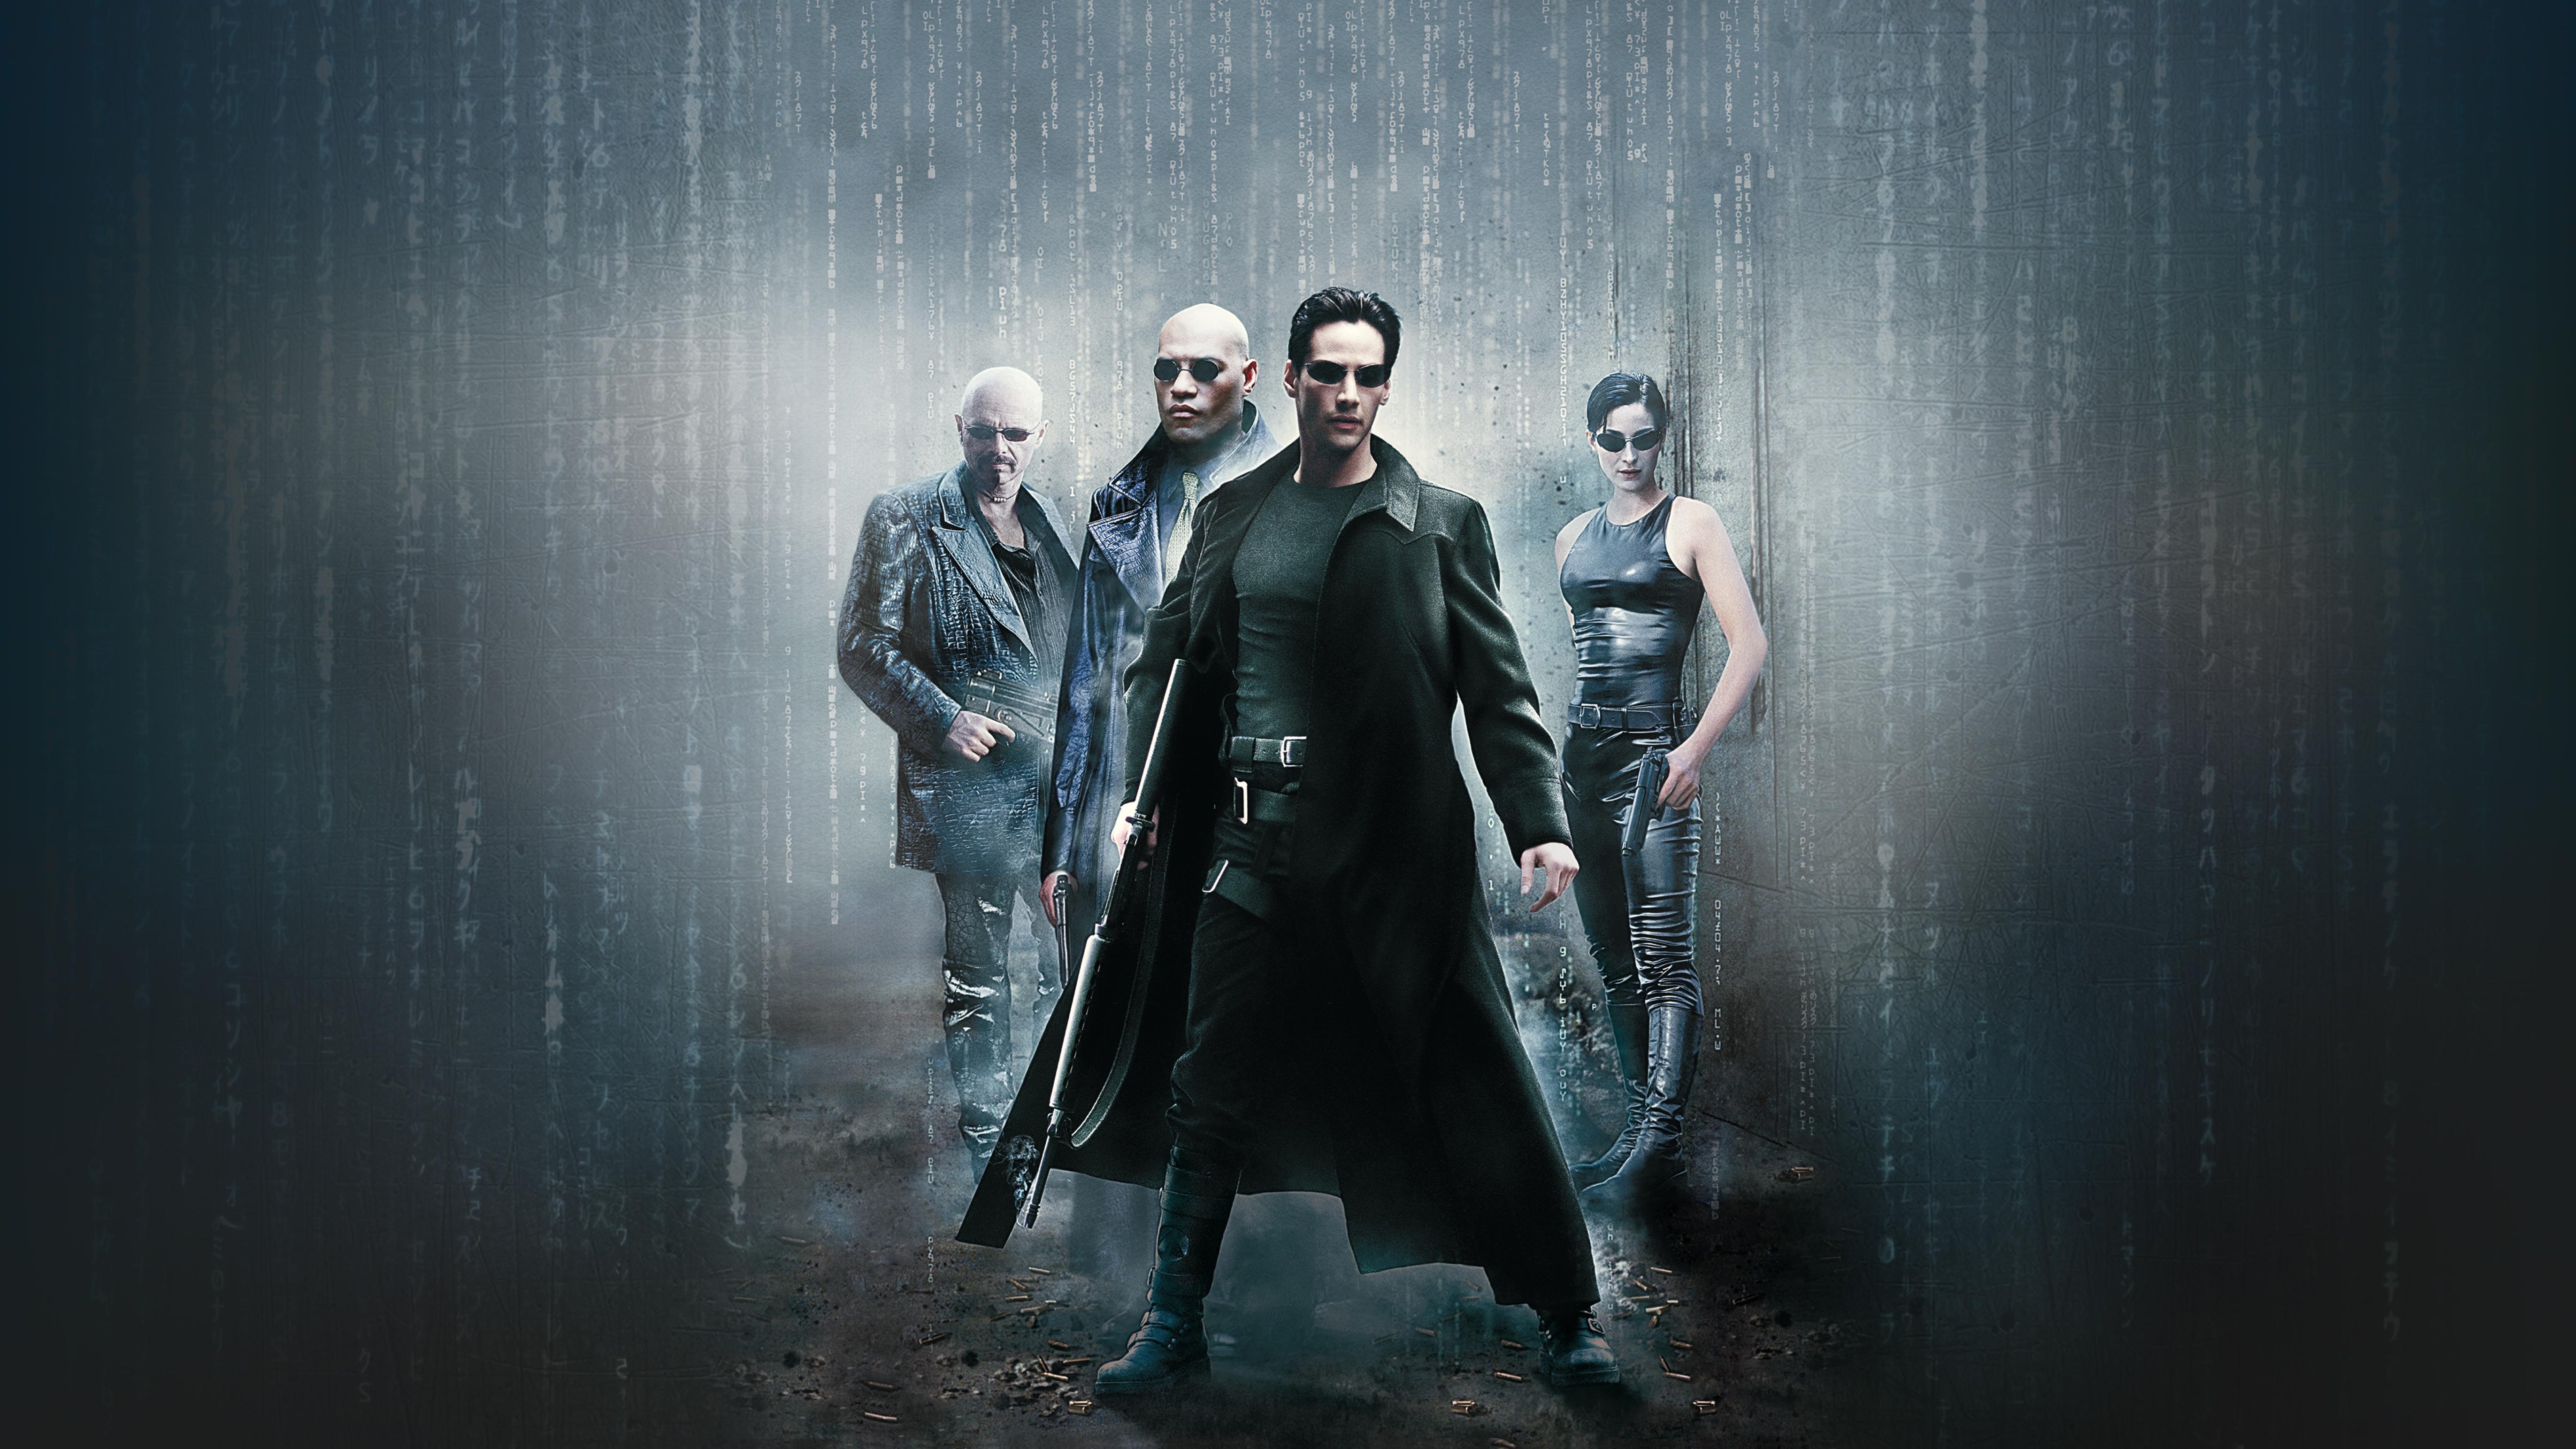 4k The Matrix Wallpaper Background Image